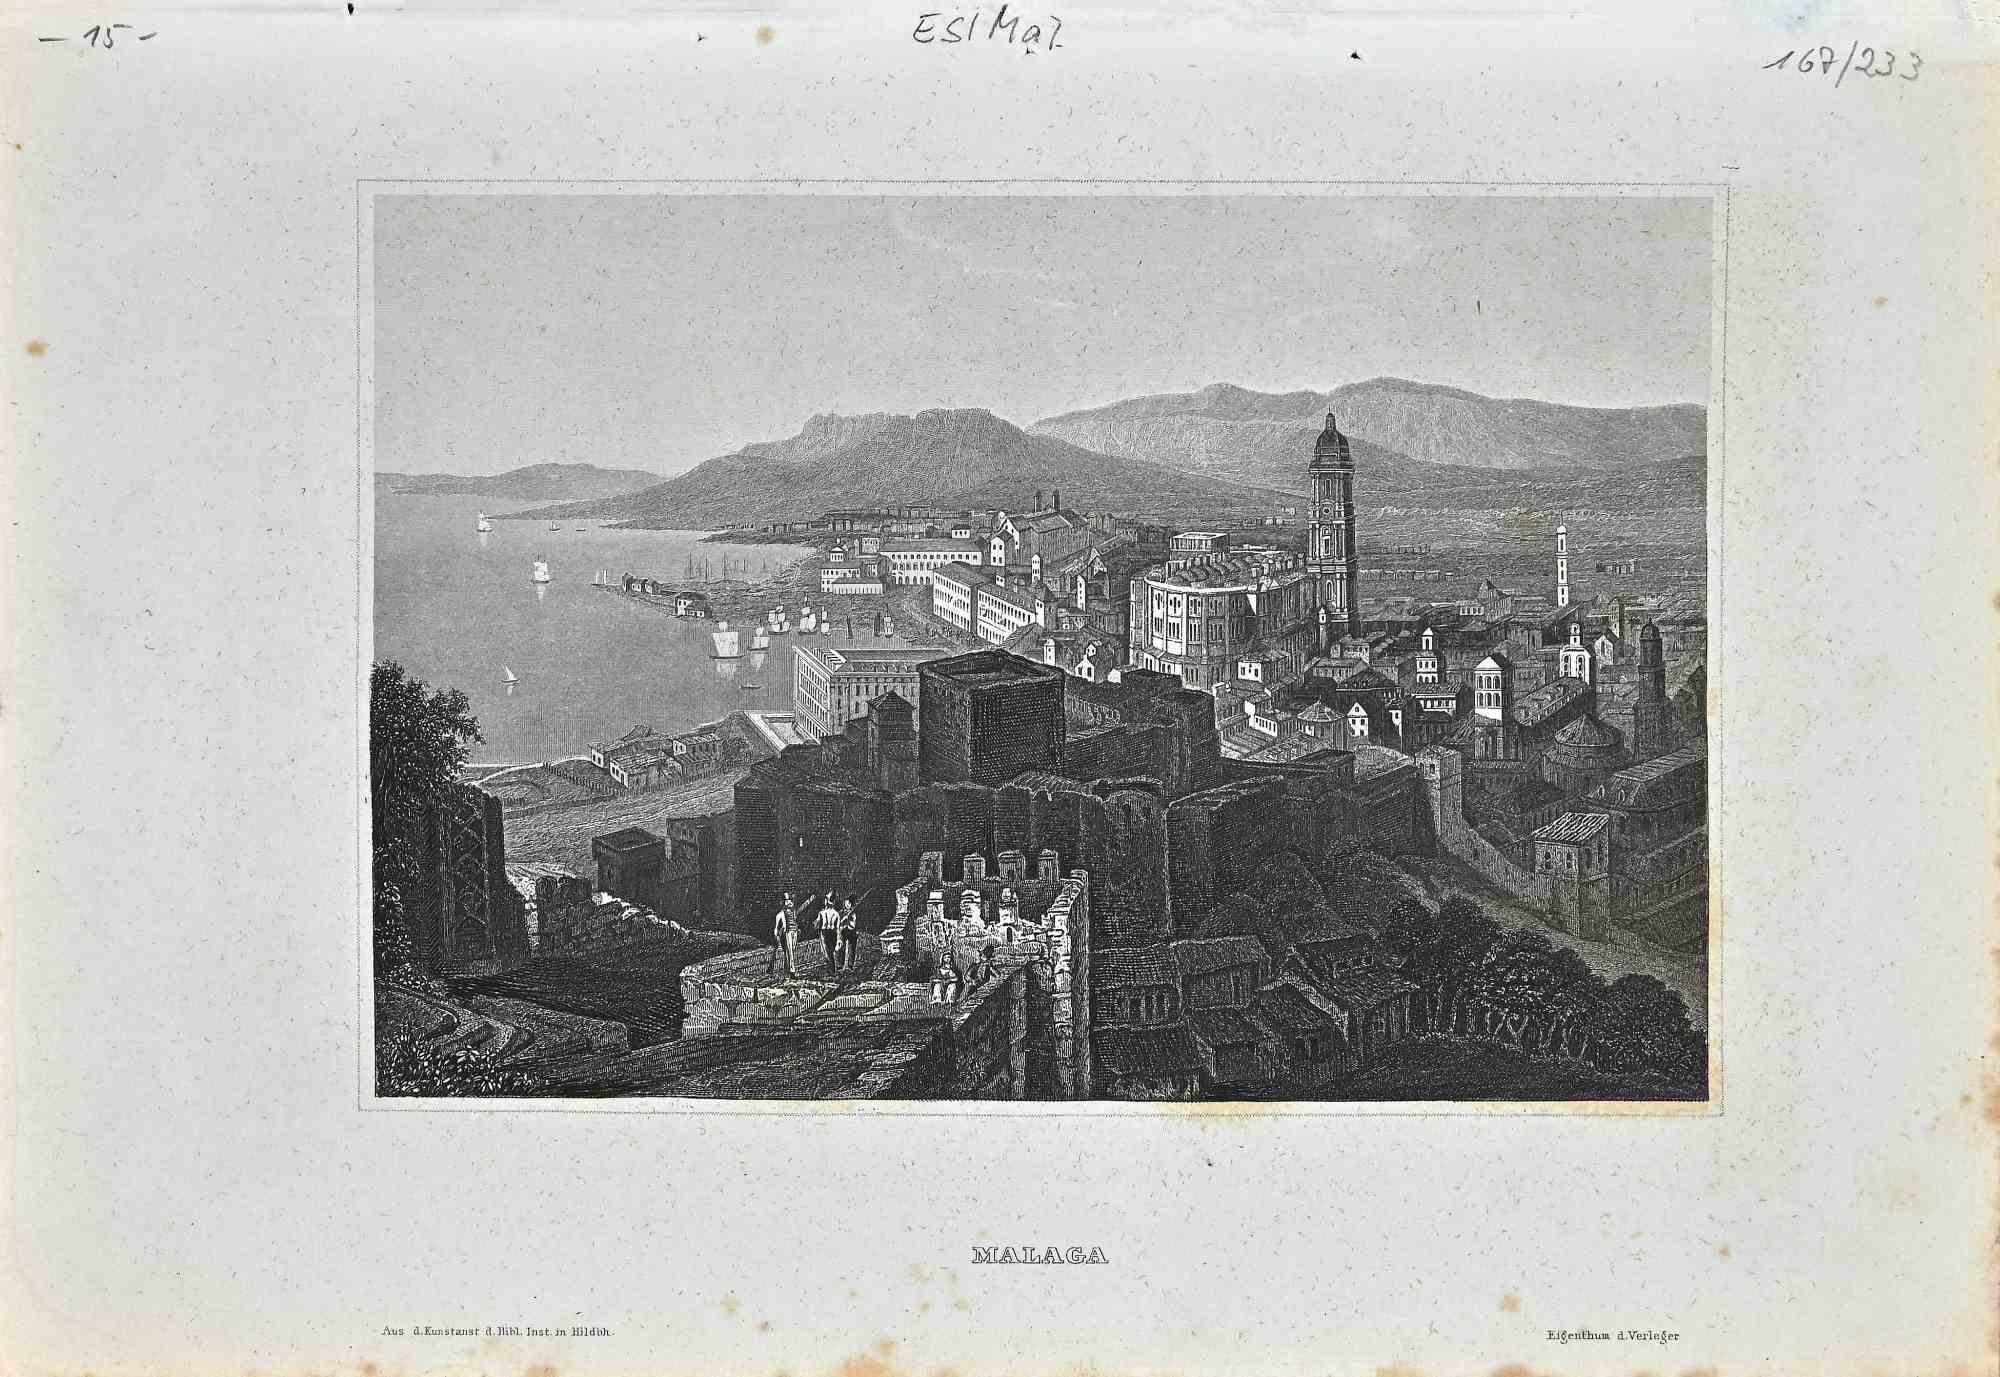 View of Malaga - Original Lithograph by Eigenthum d. Verleger - 19th Century